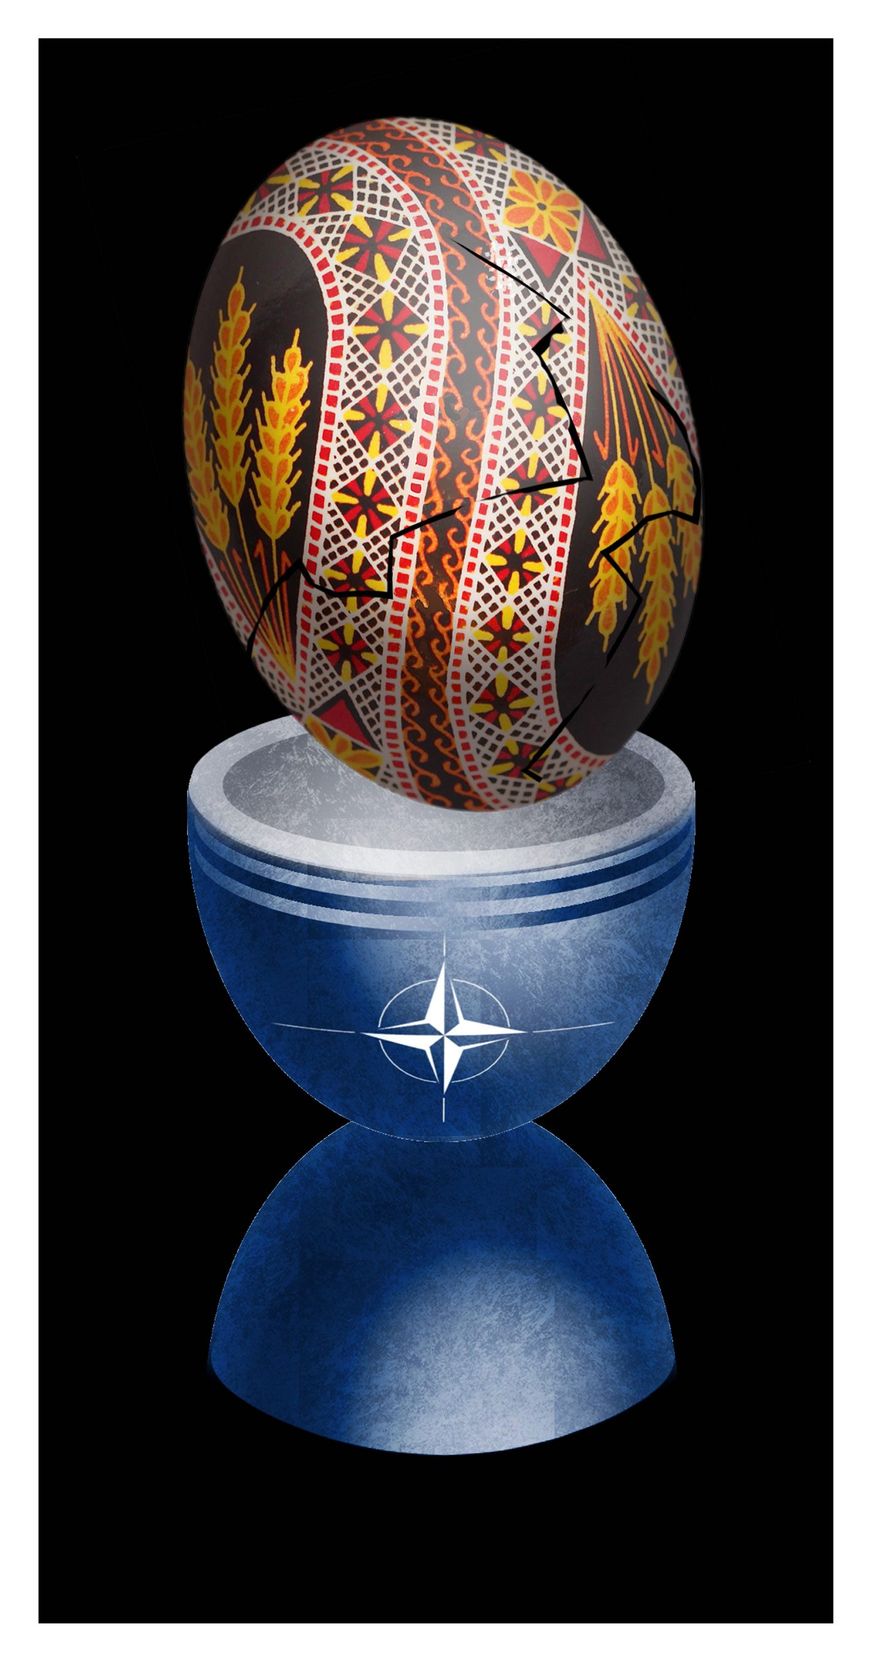 Illustration on Ukraine and NATO by Alexander Hunter/The Washington Times